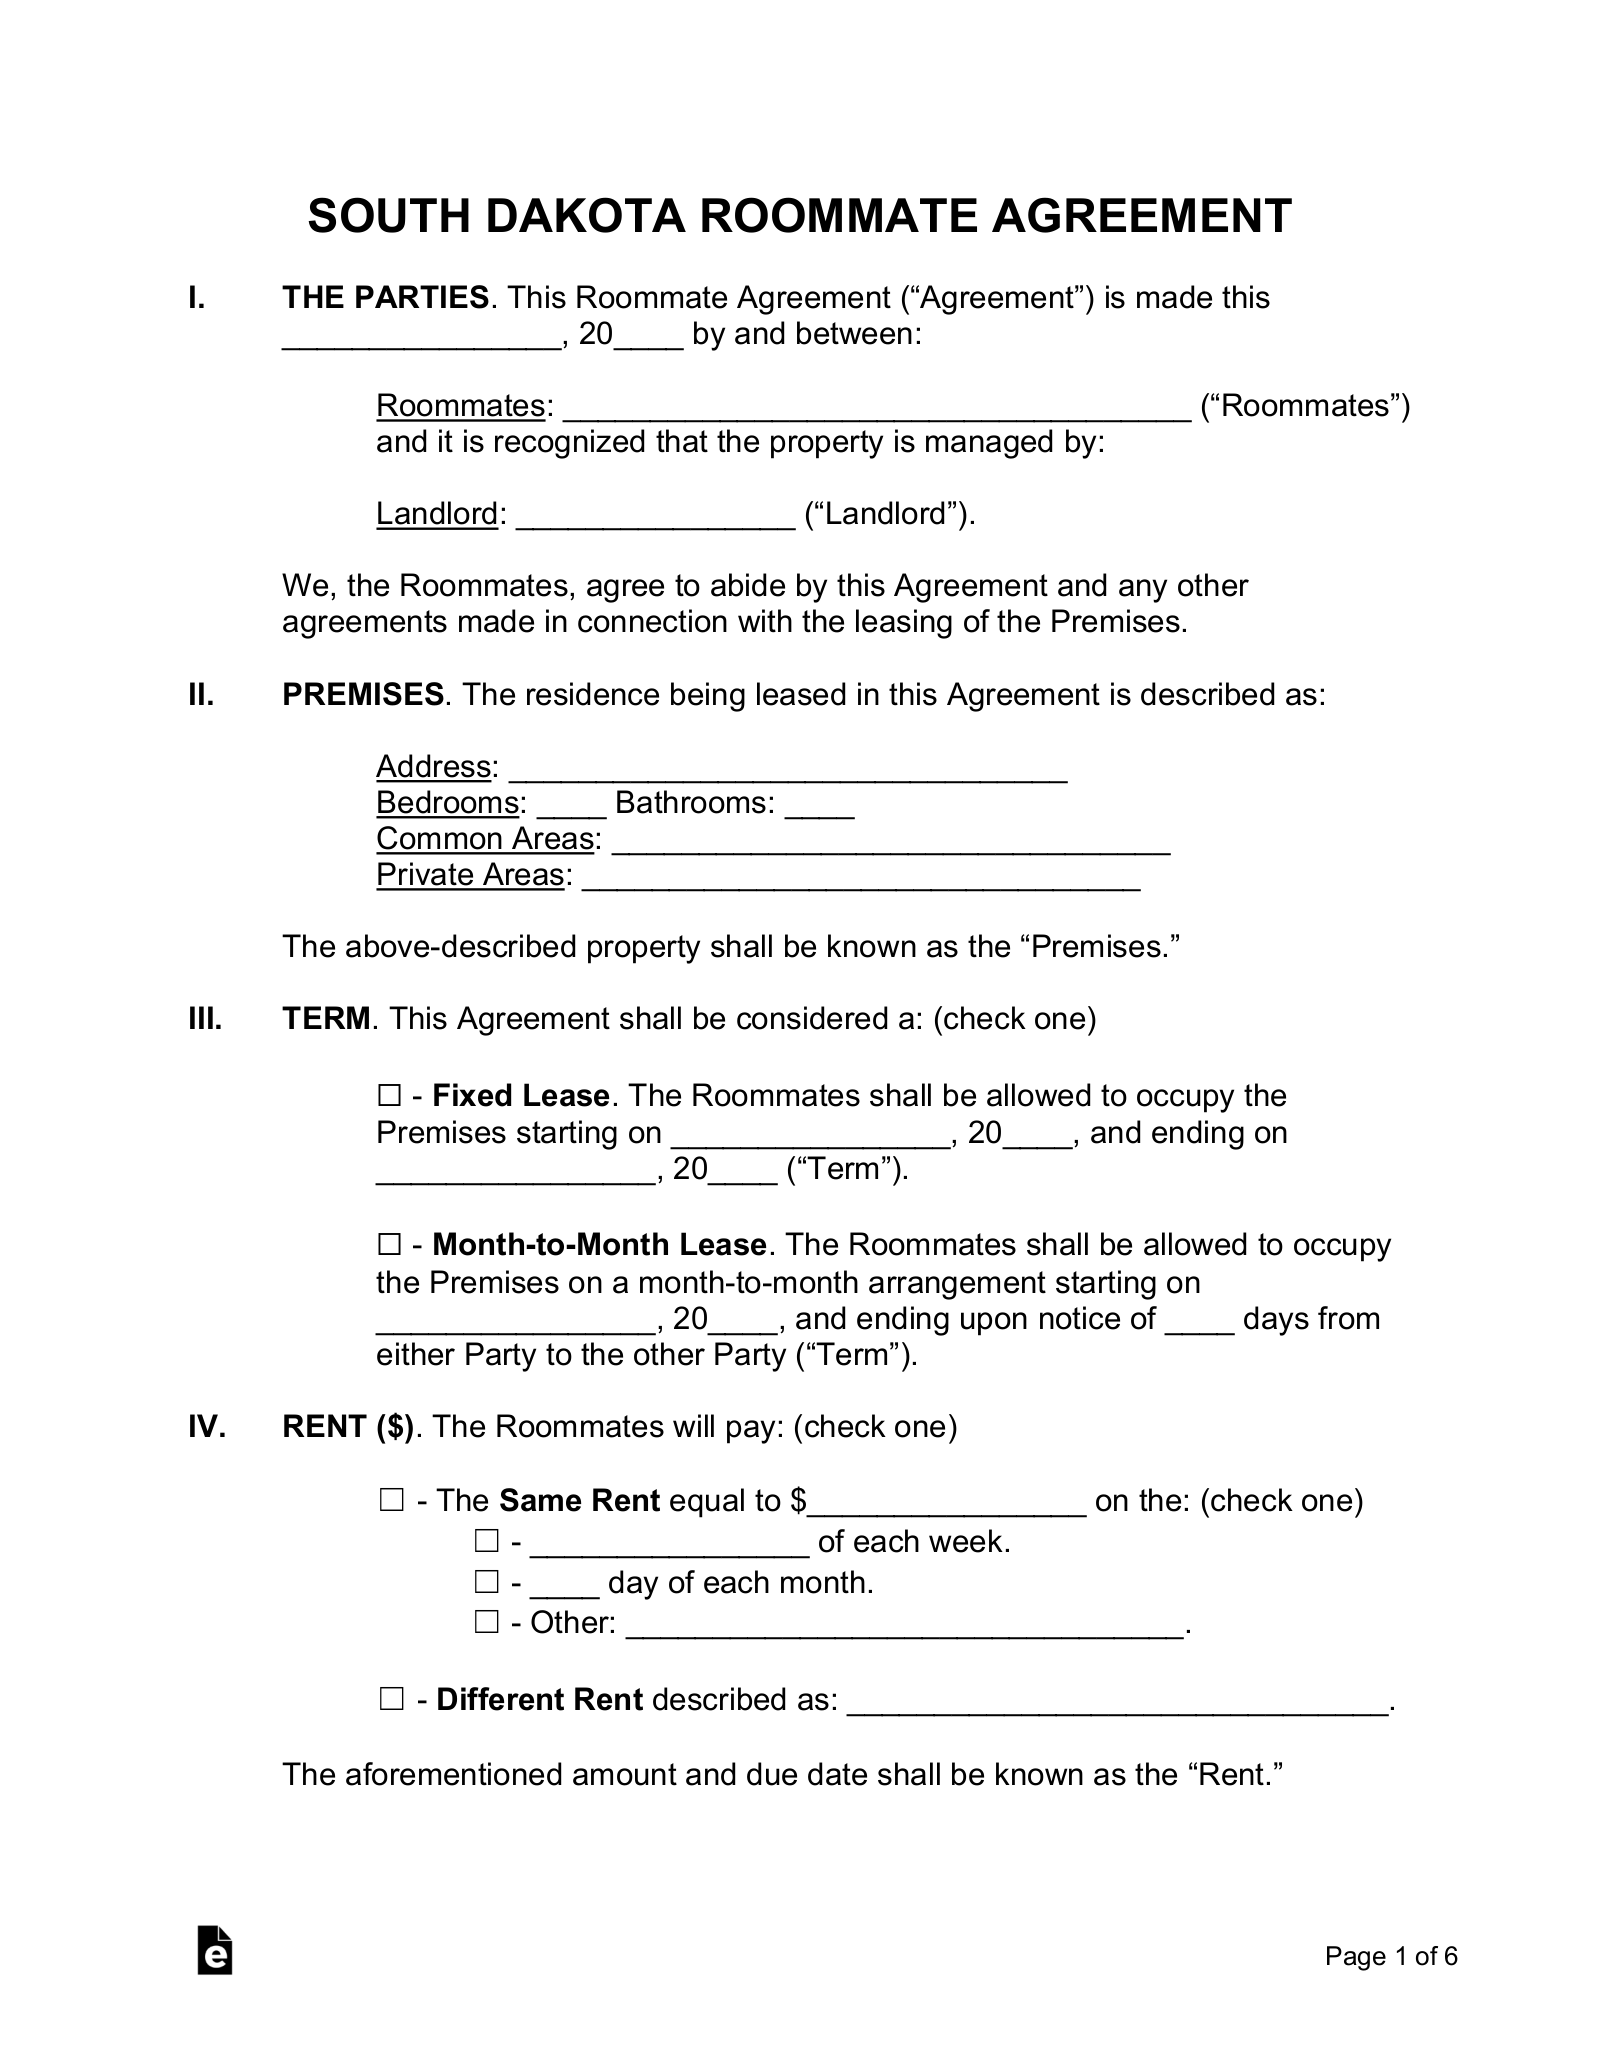 South Dakota Roommate Agreement Form